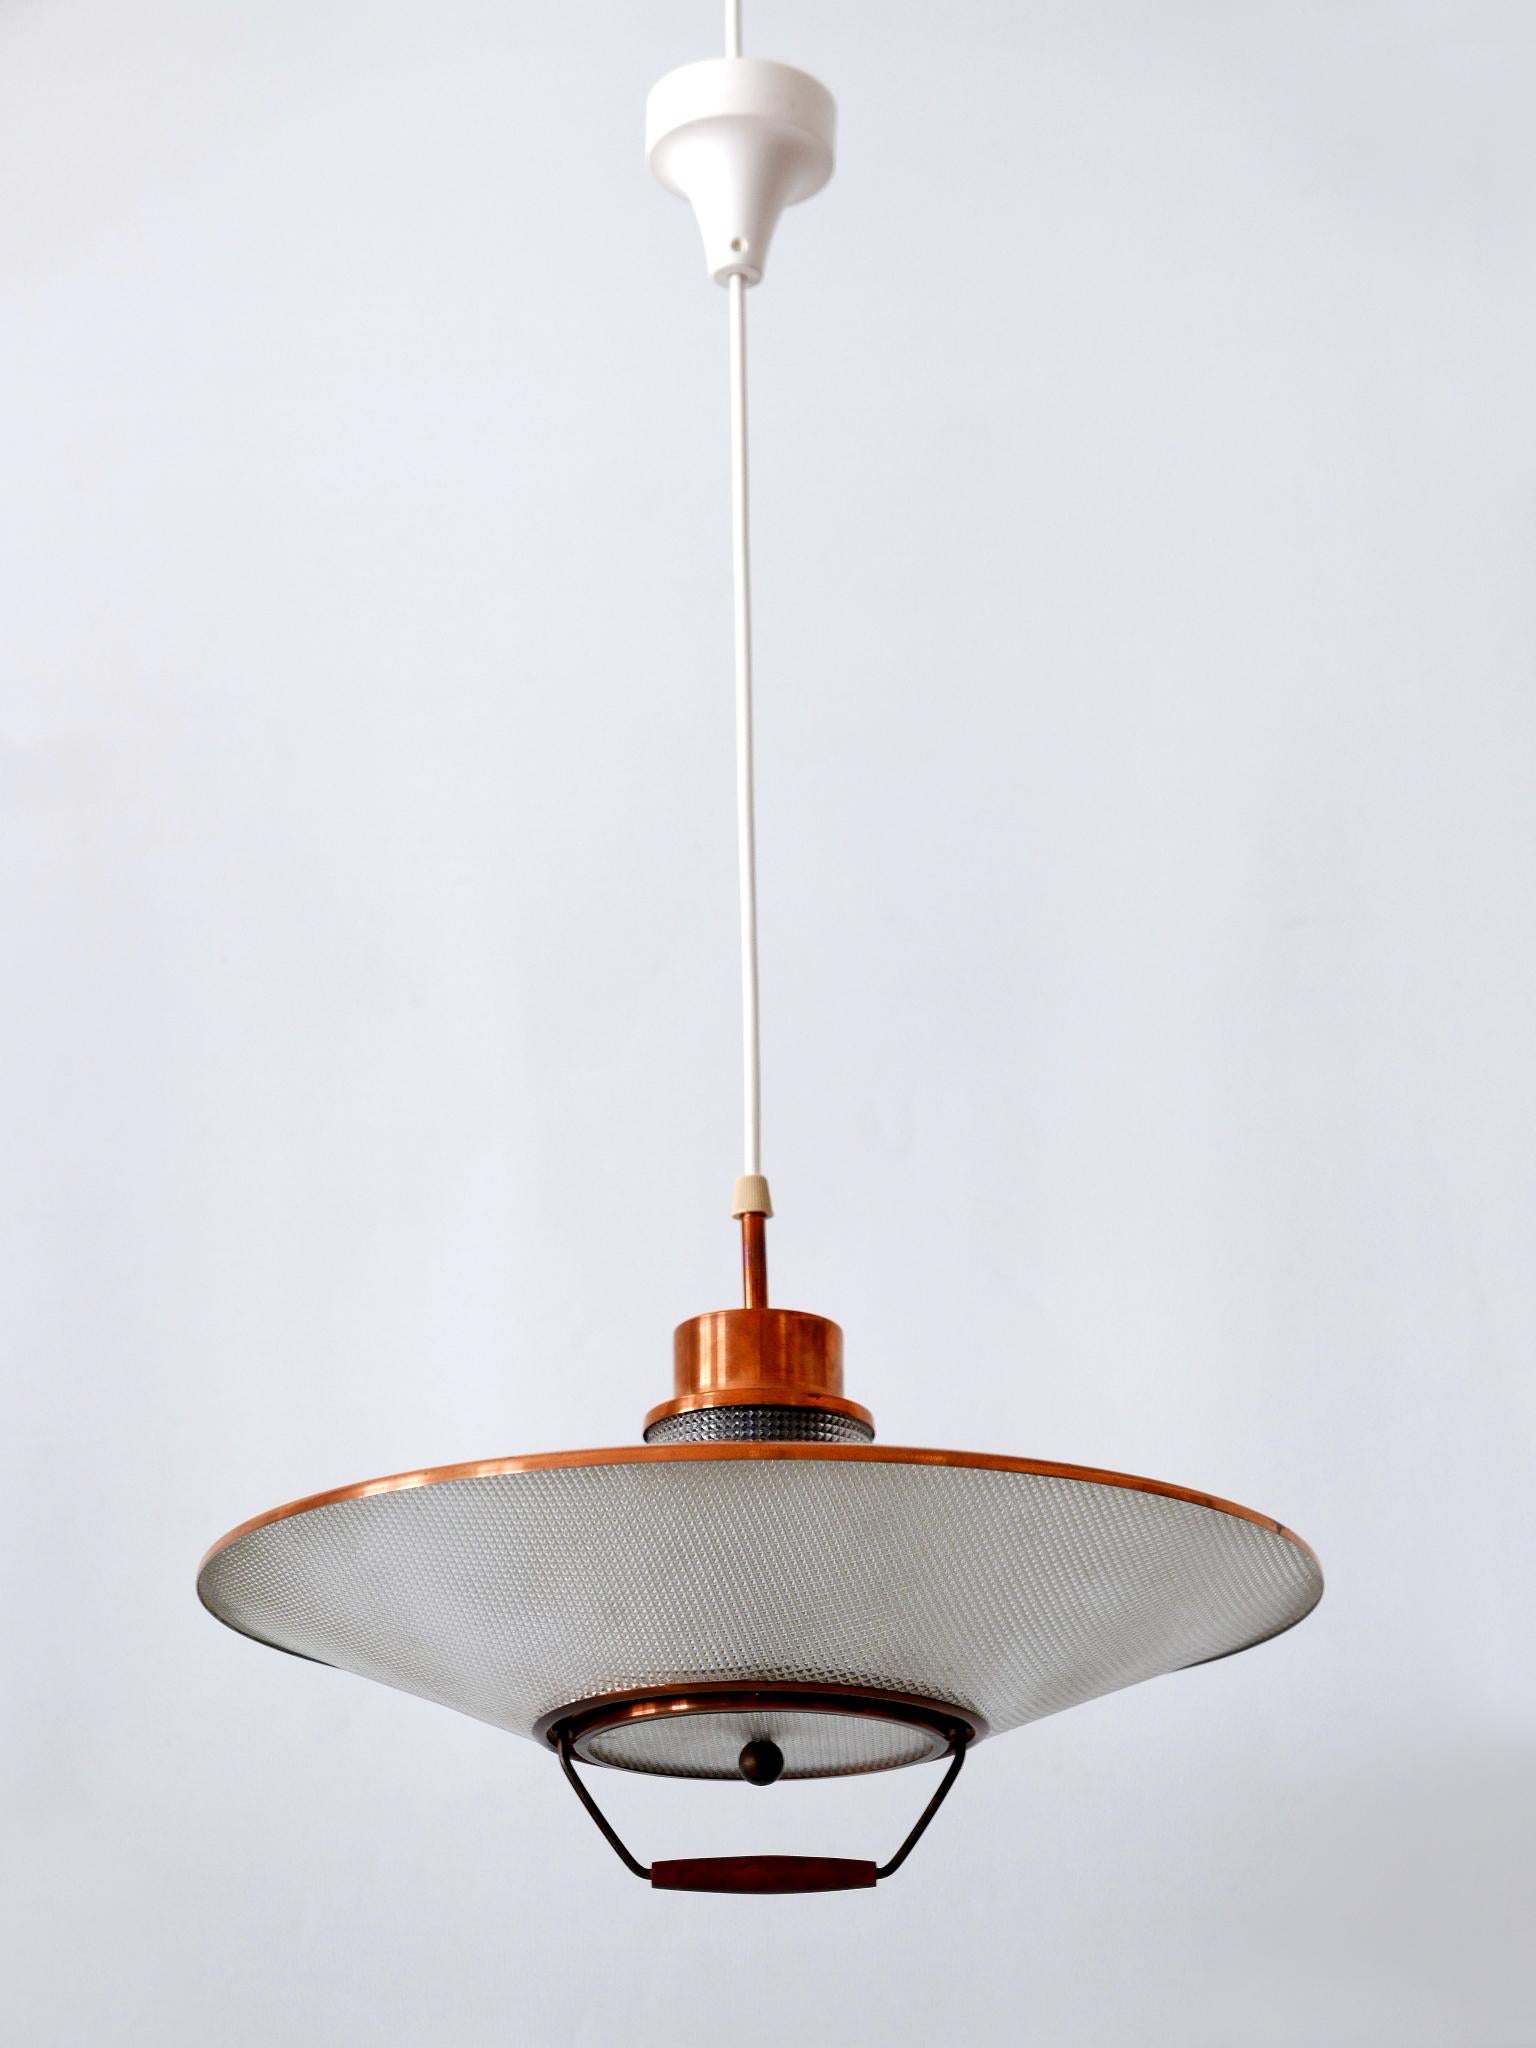 Rare Mid-Century Modern Scandinavian Copper Pendant Lamp or Hanging Light 1960s  For Sale 7